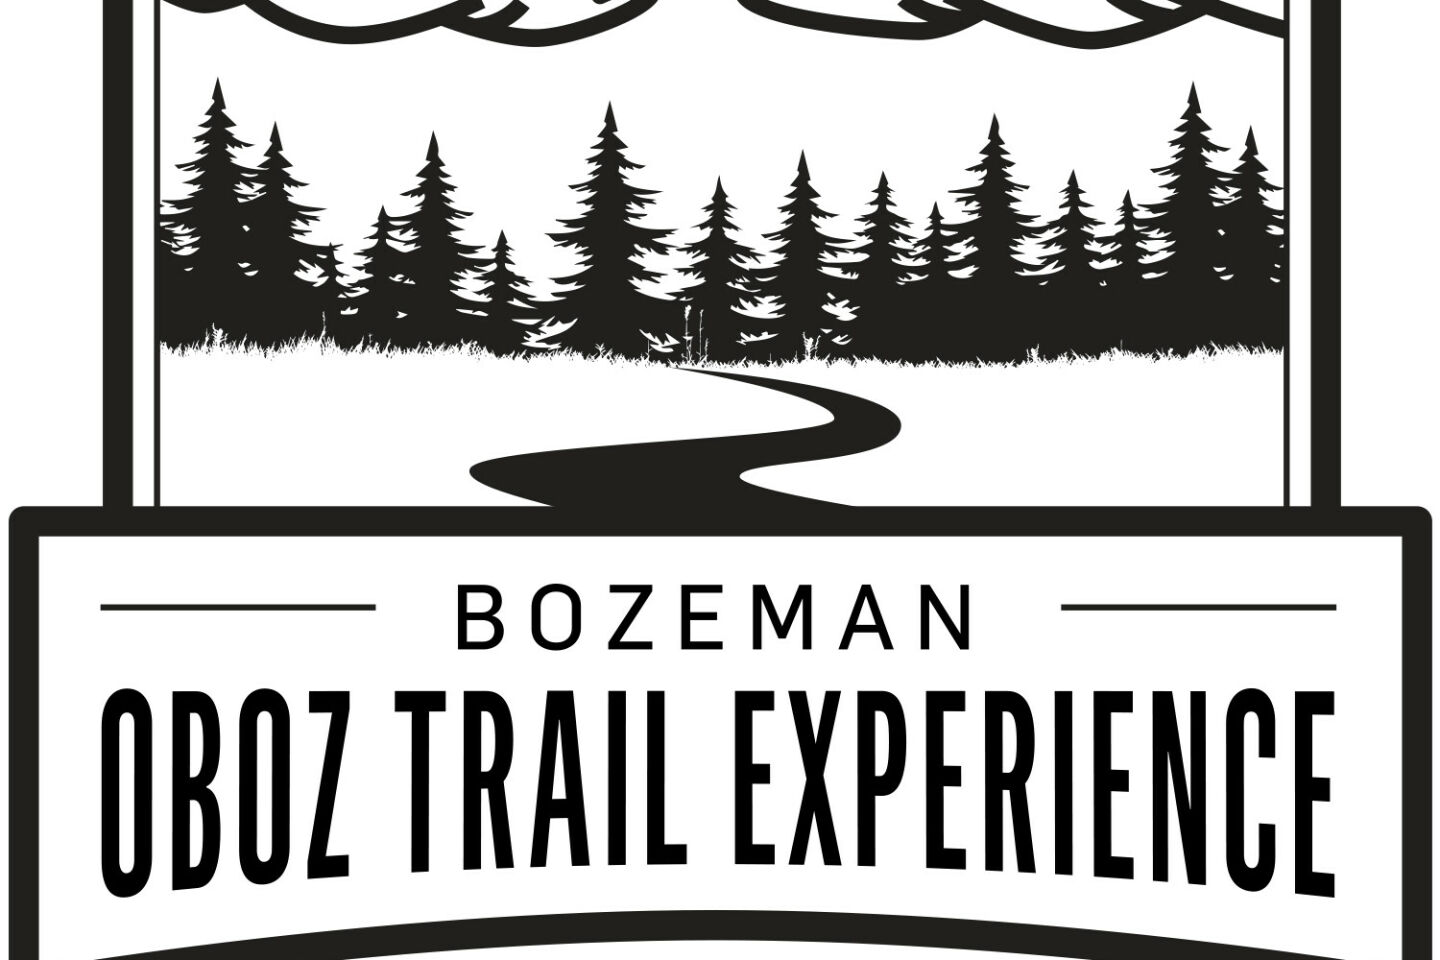 Oboz Trail Experience Bozeman Gallatin Valley